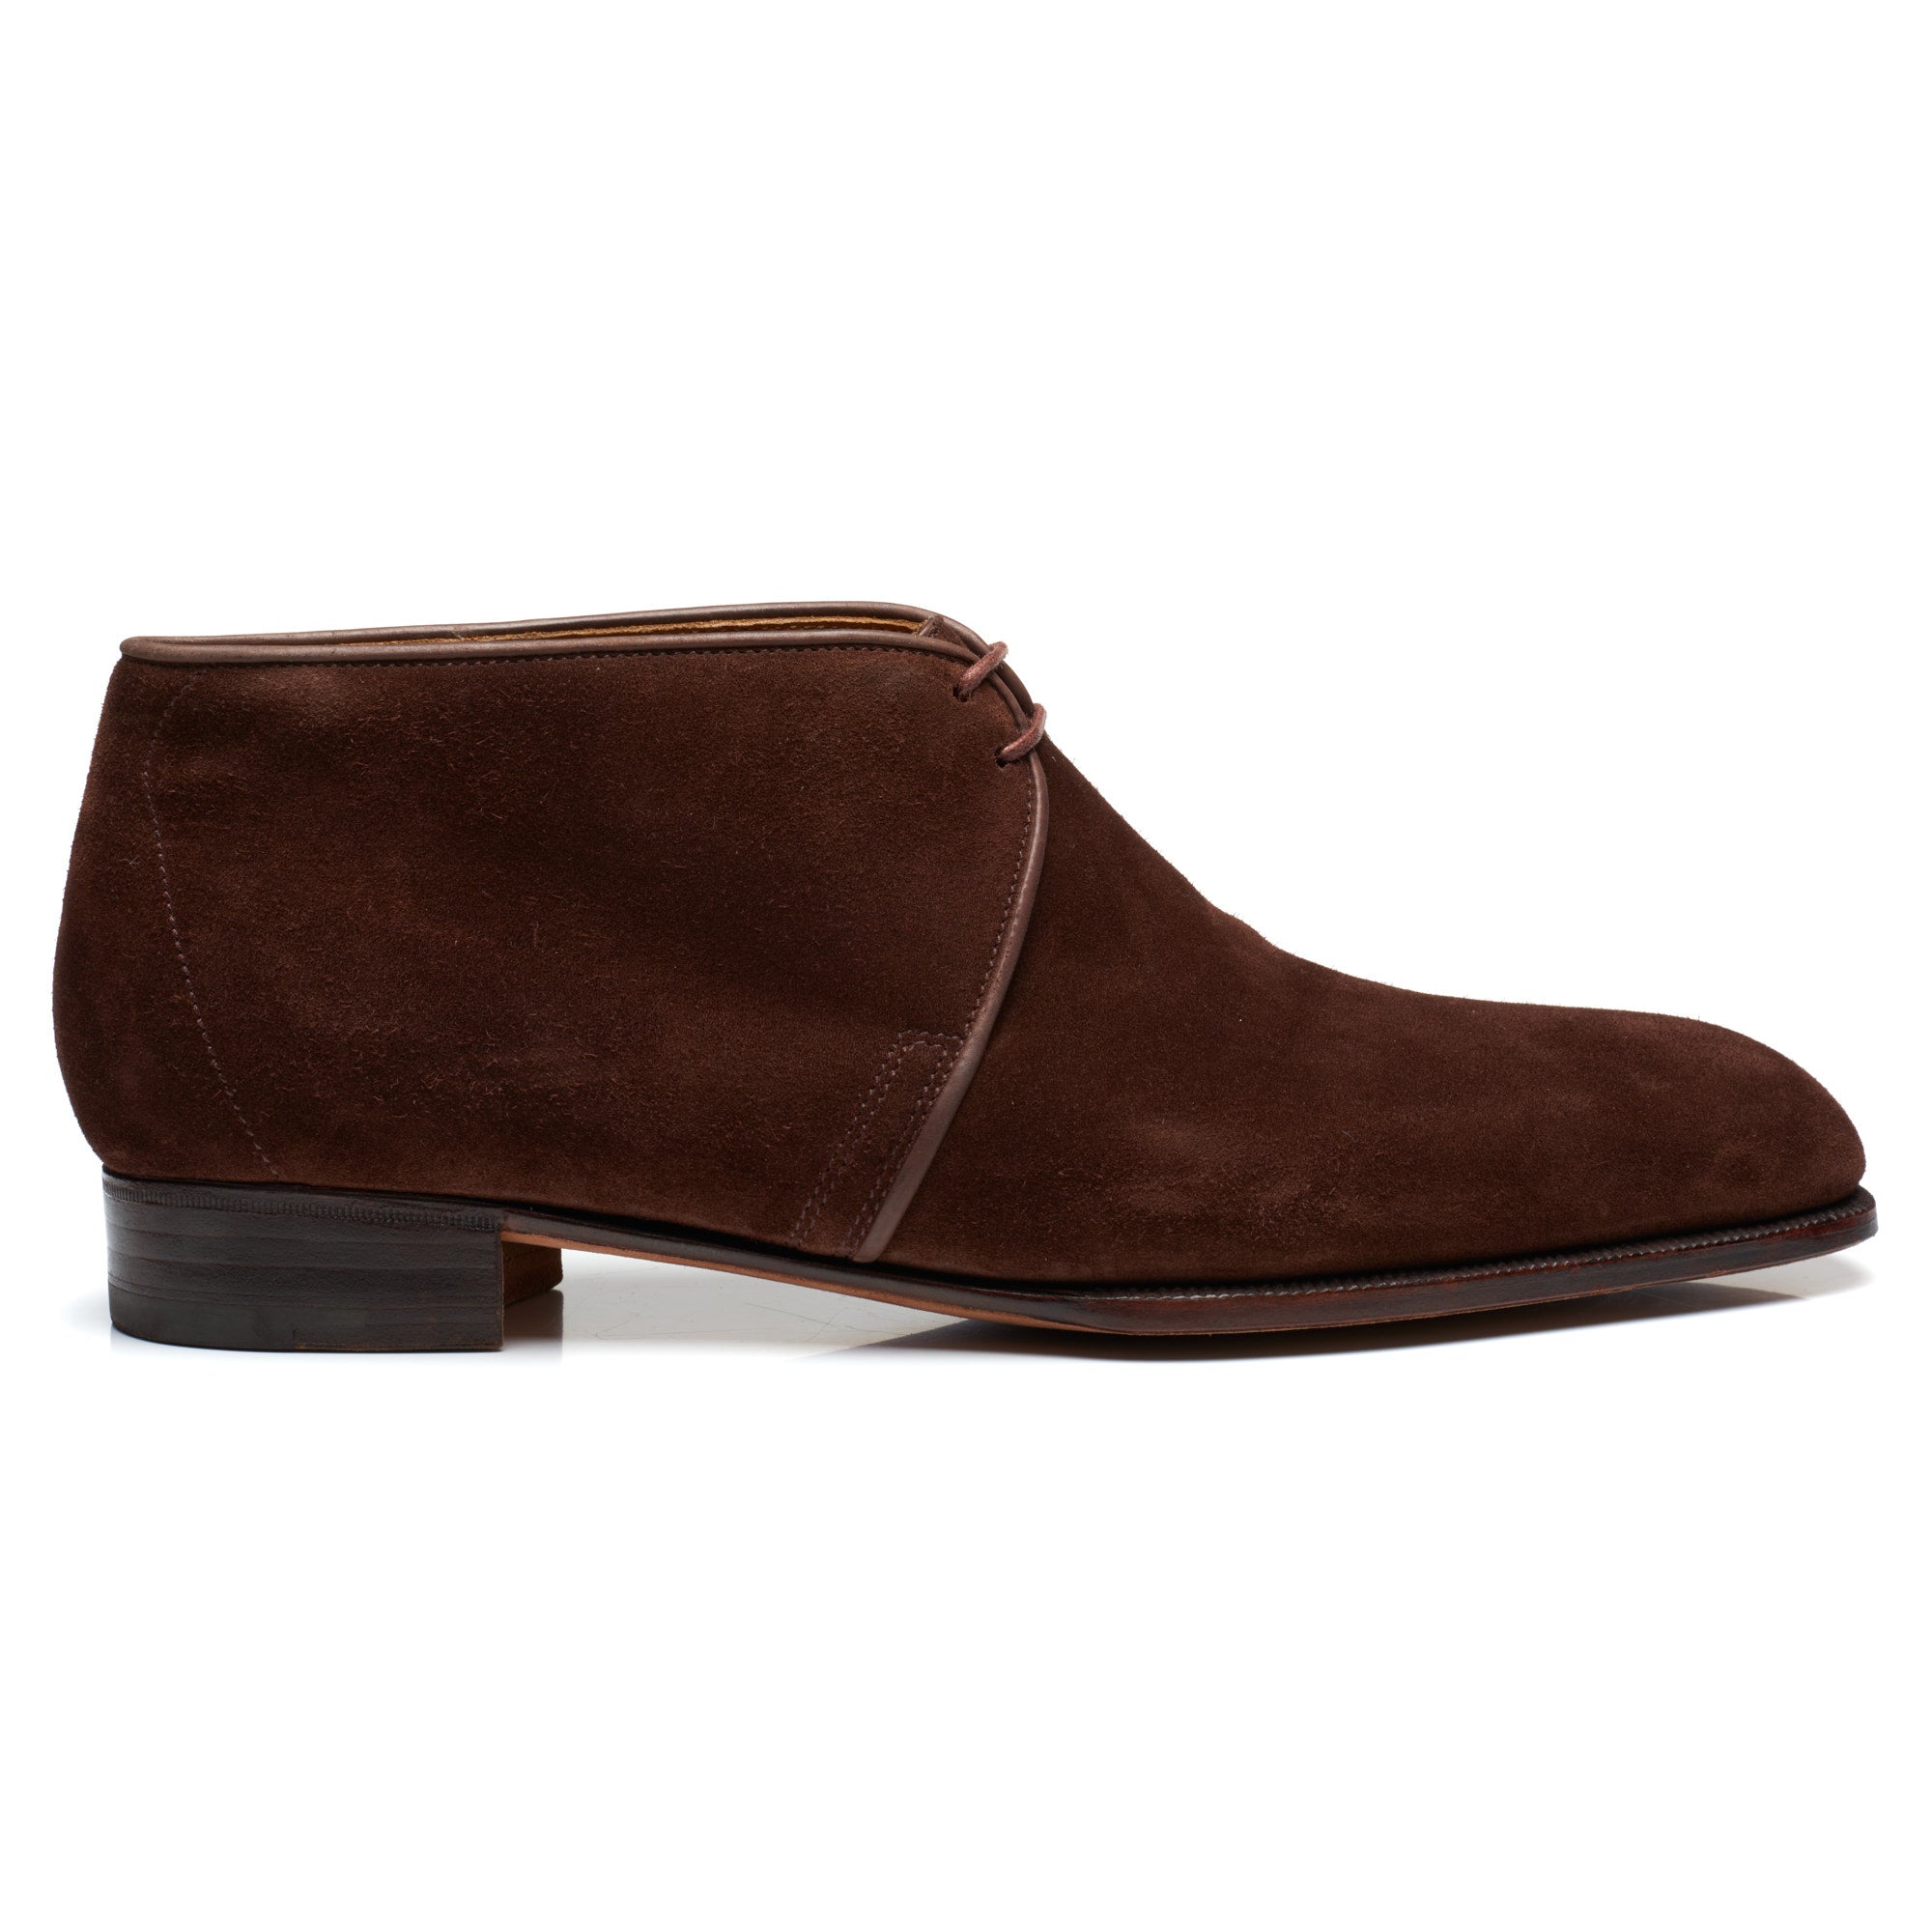 JOHN LOBB Paris Bespoke Brown Suede Leather Chukka Boots Shoes UK 7.5 US 8.5